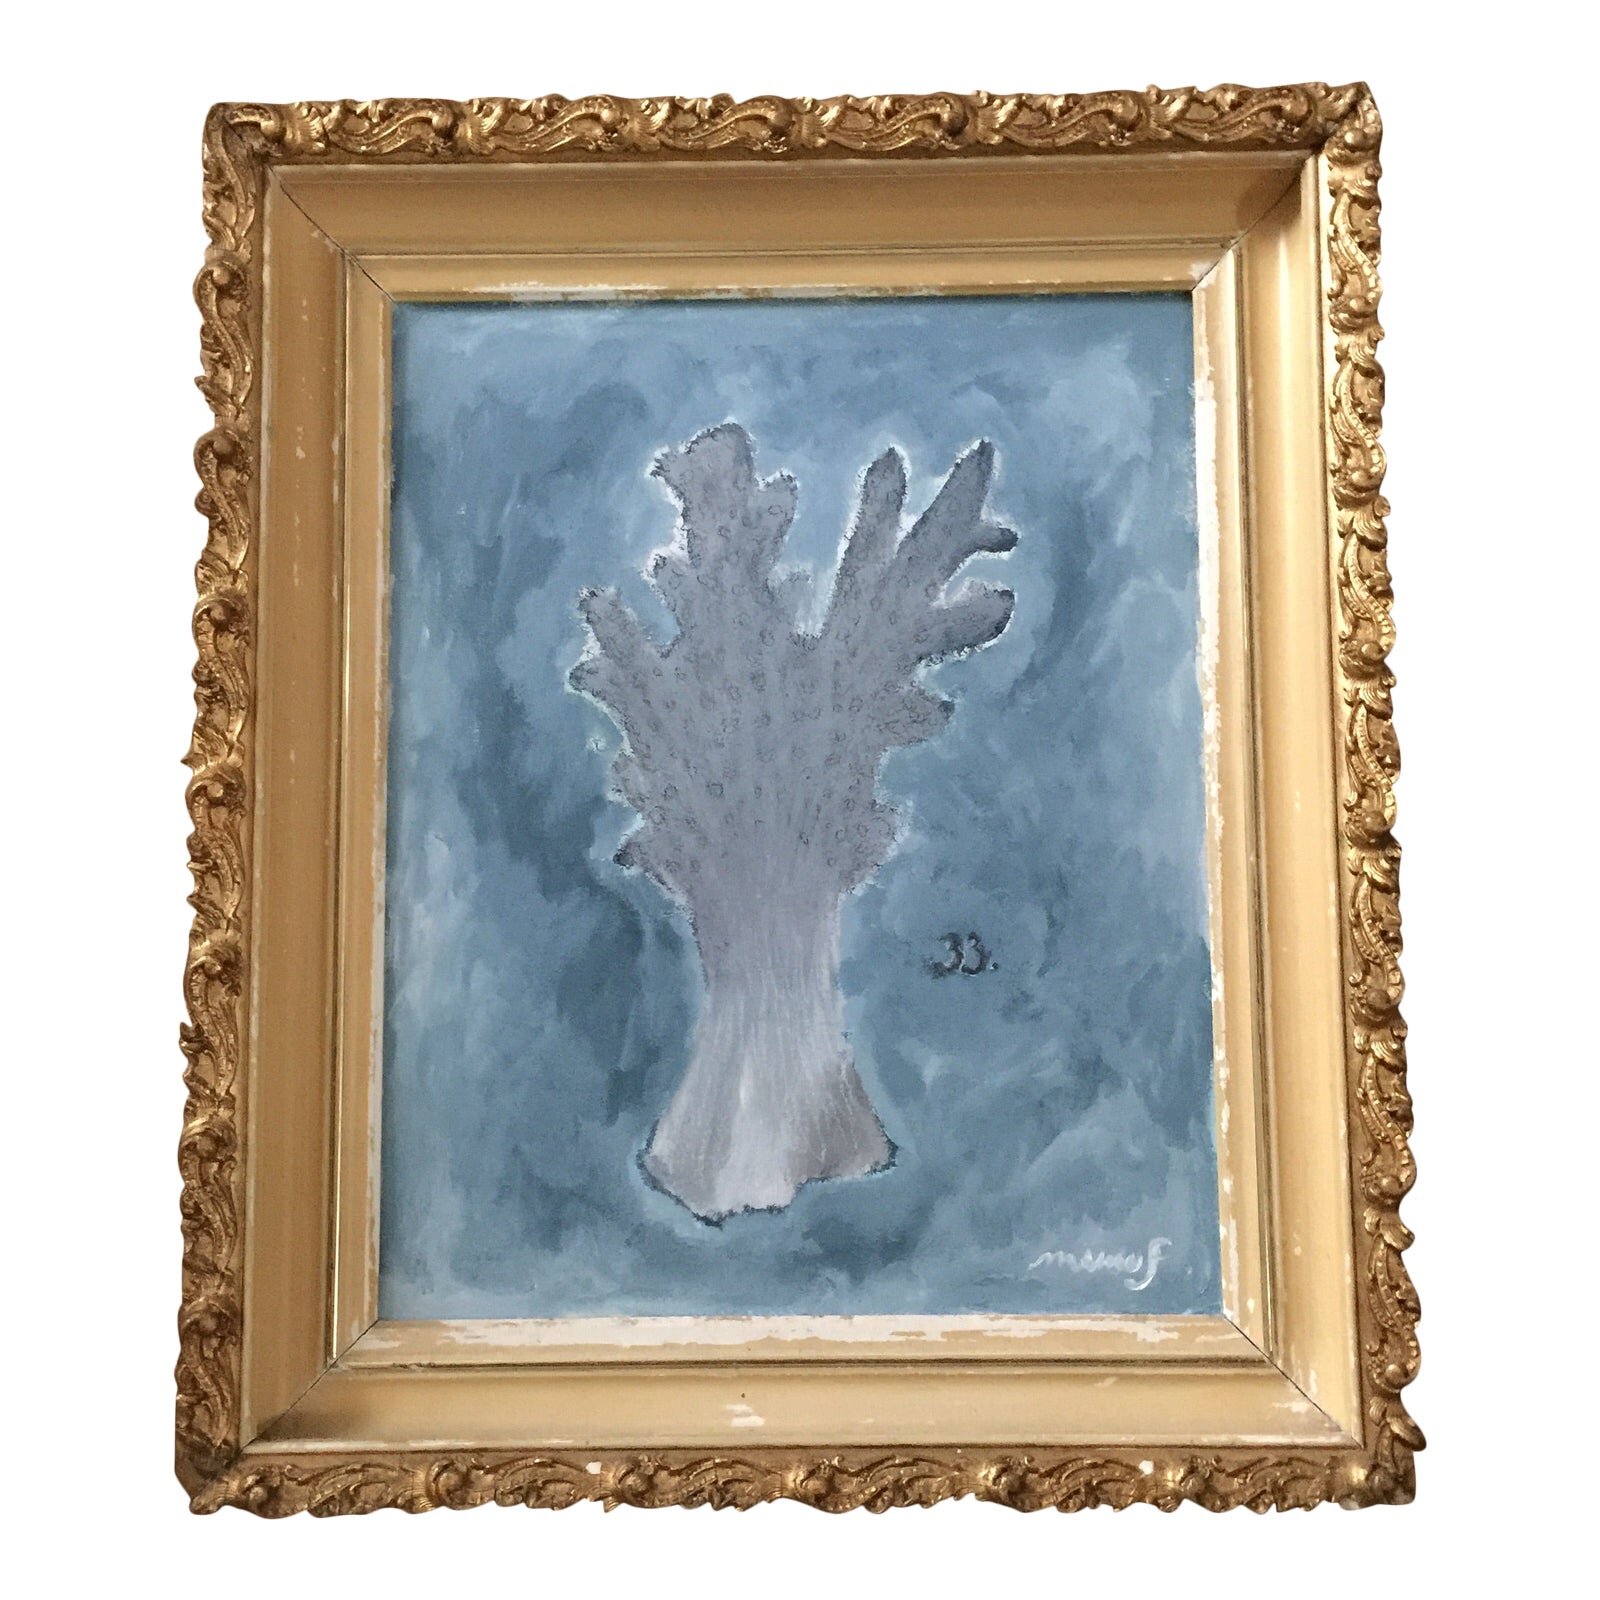 memo-faraj-coral-fragment-nautical-sea-life-science-painting-5871.jpeg